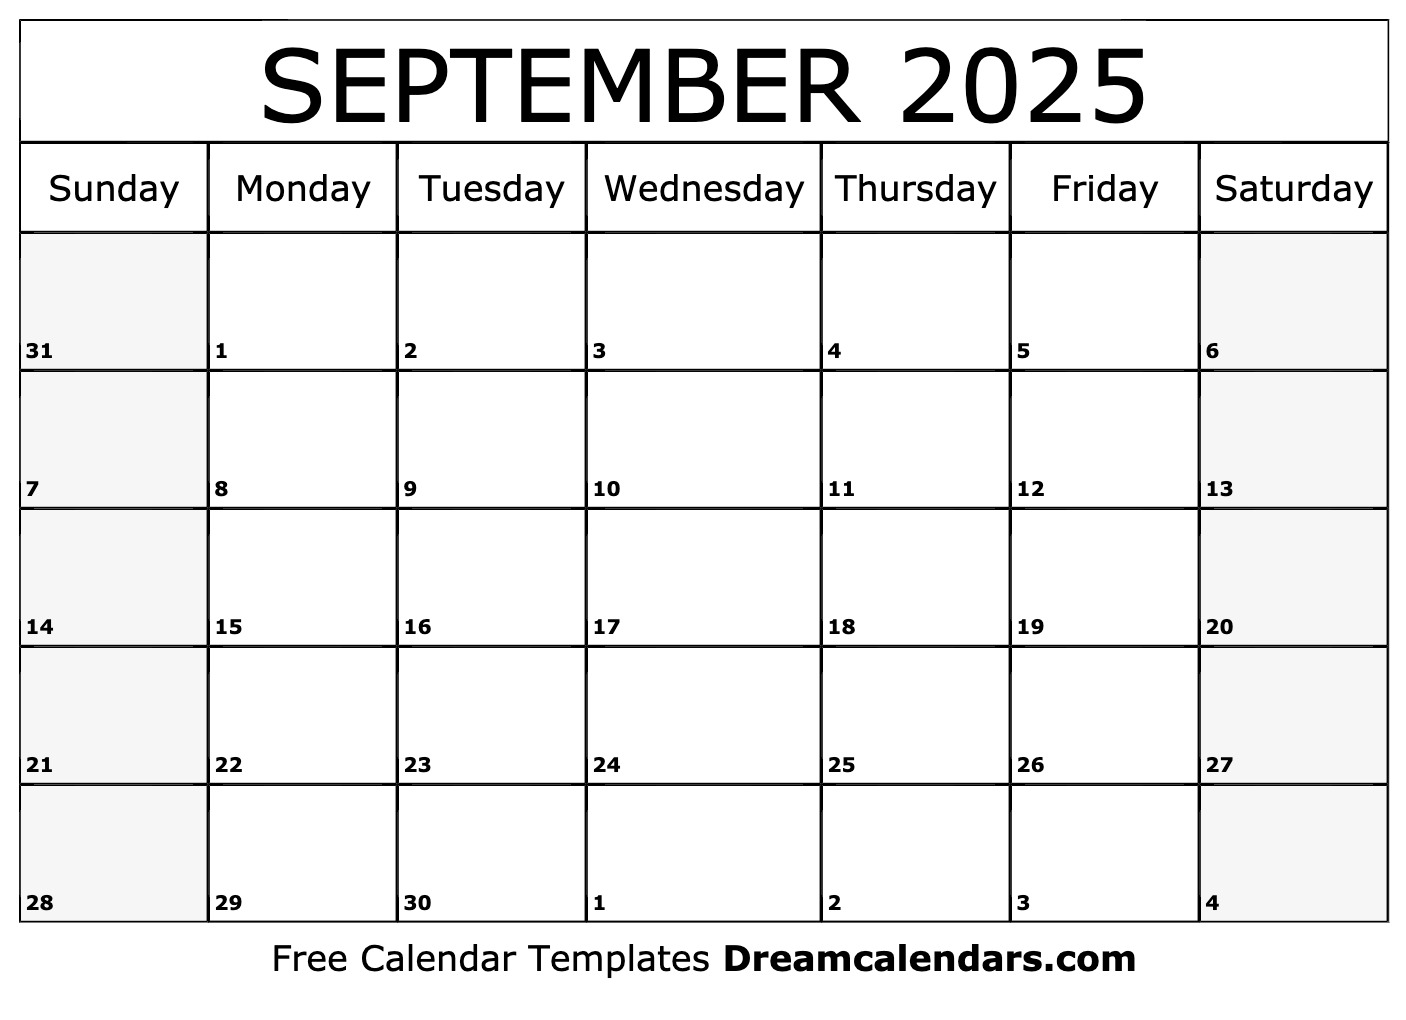 april-2025-printable-calendar